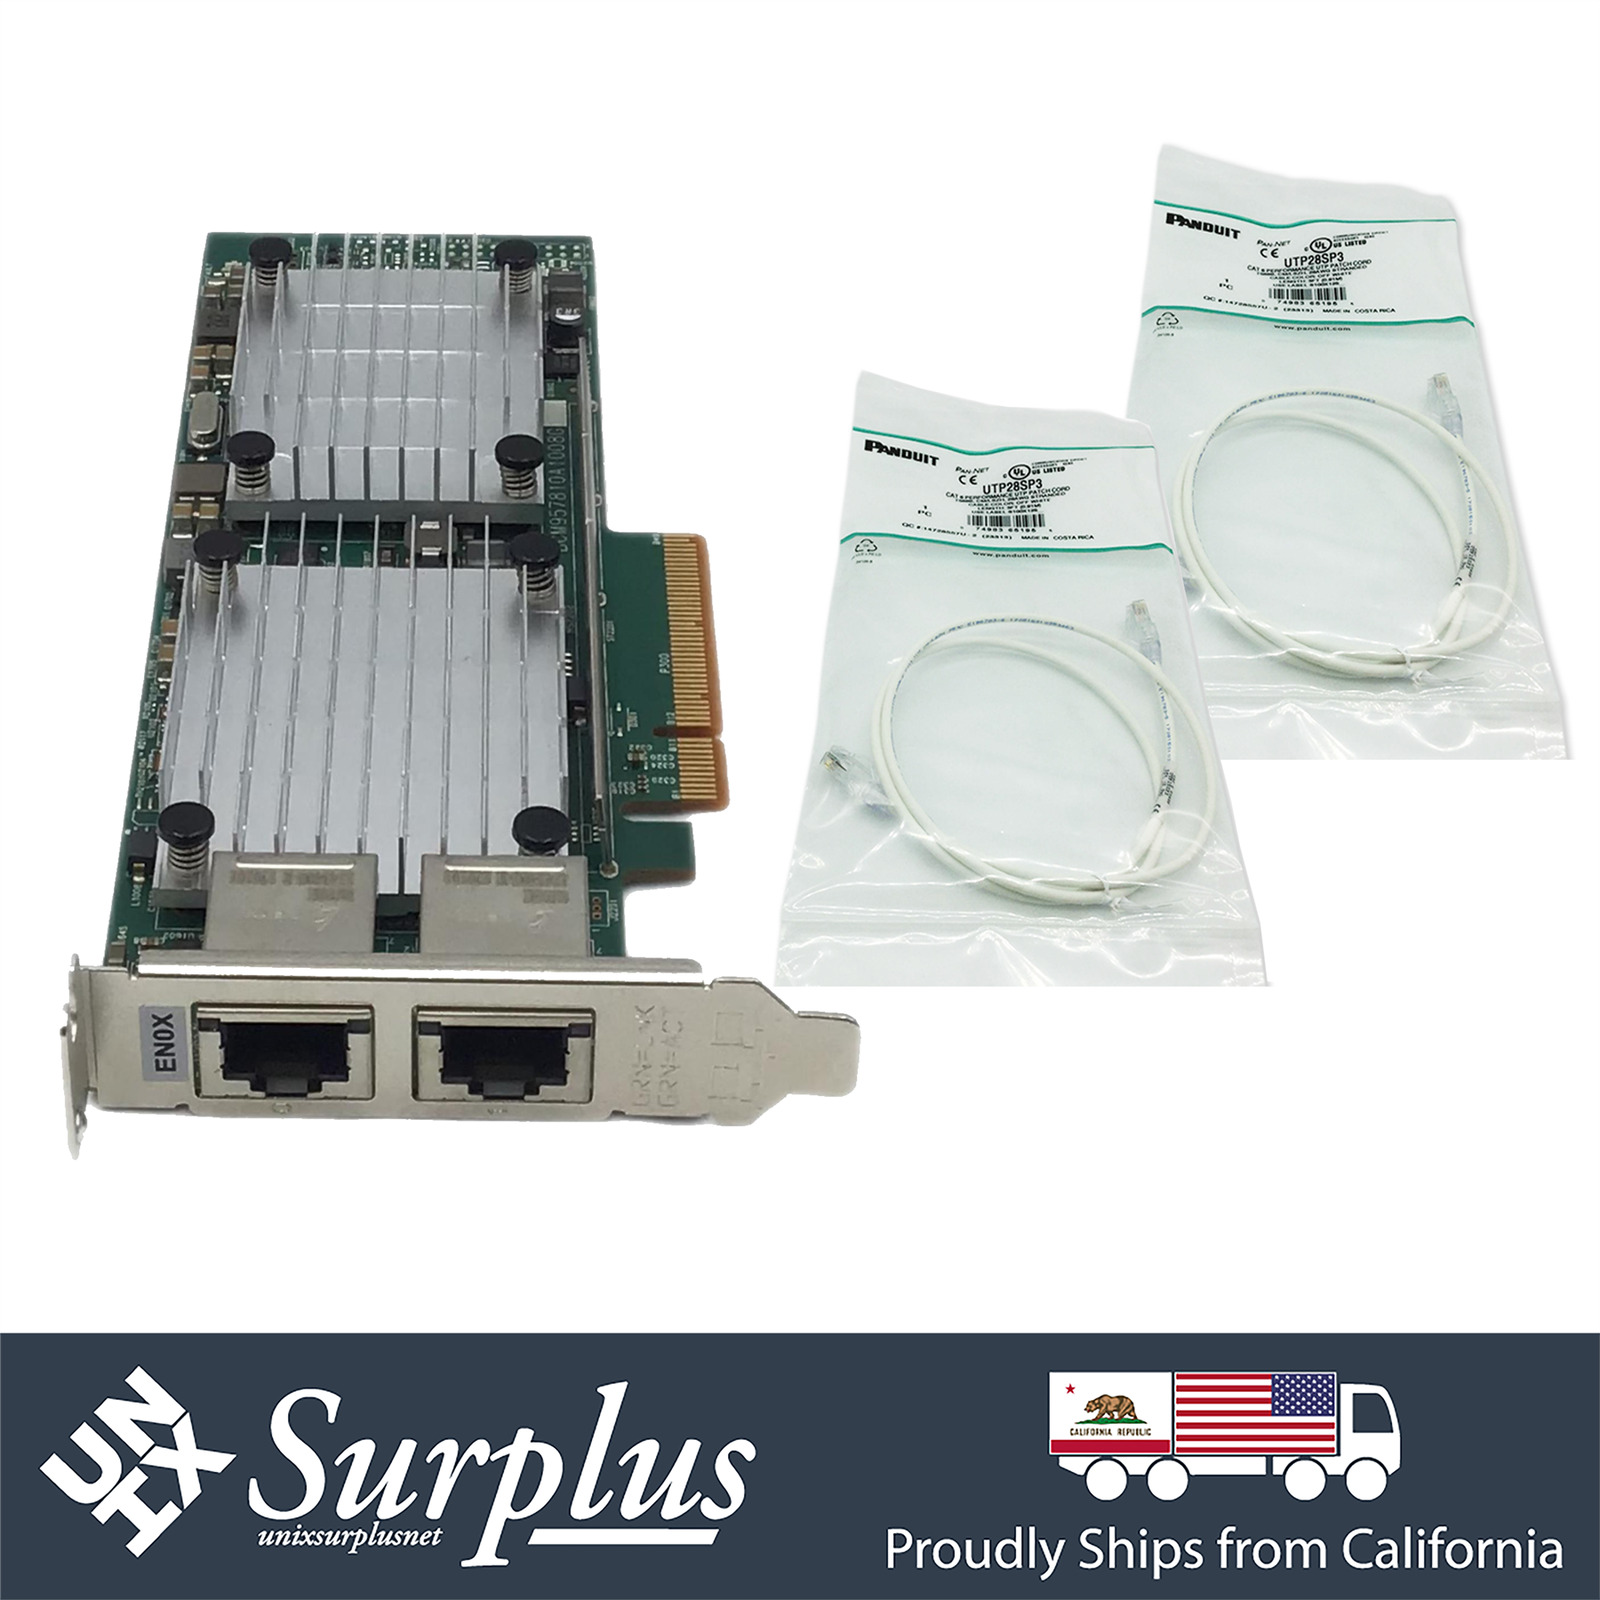 10GB RJ45 Dual Port 57810S Broadcom NIC PCIe x8 Adapter w/ 2x 3/5/7ft CAT6 Cable